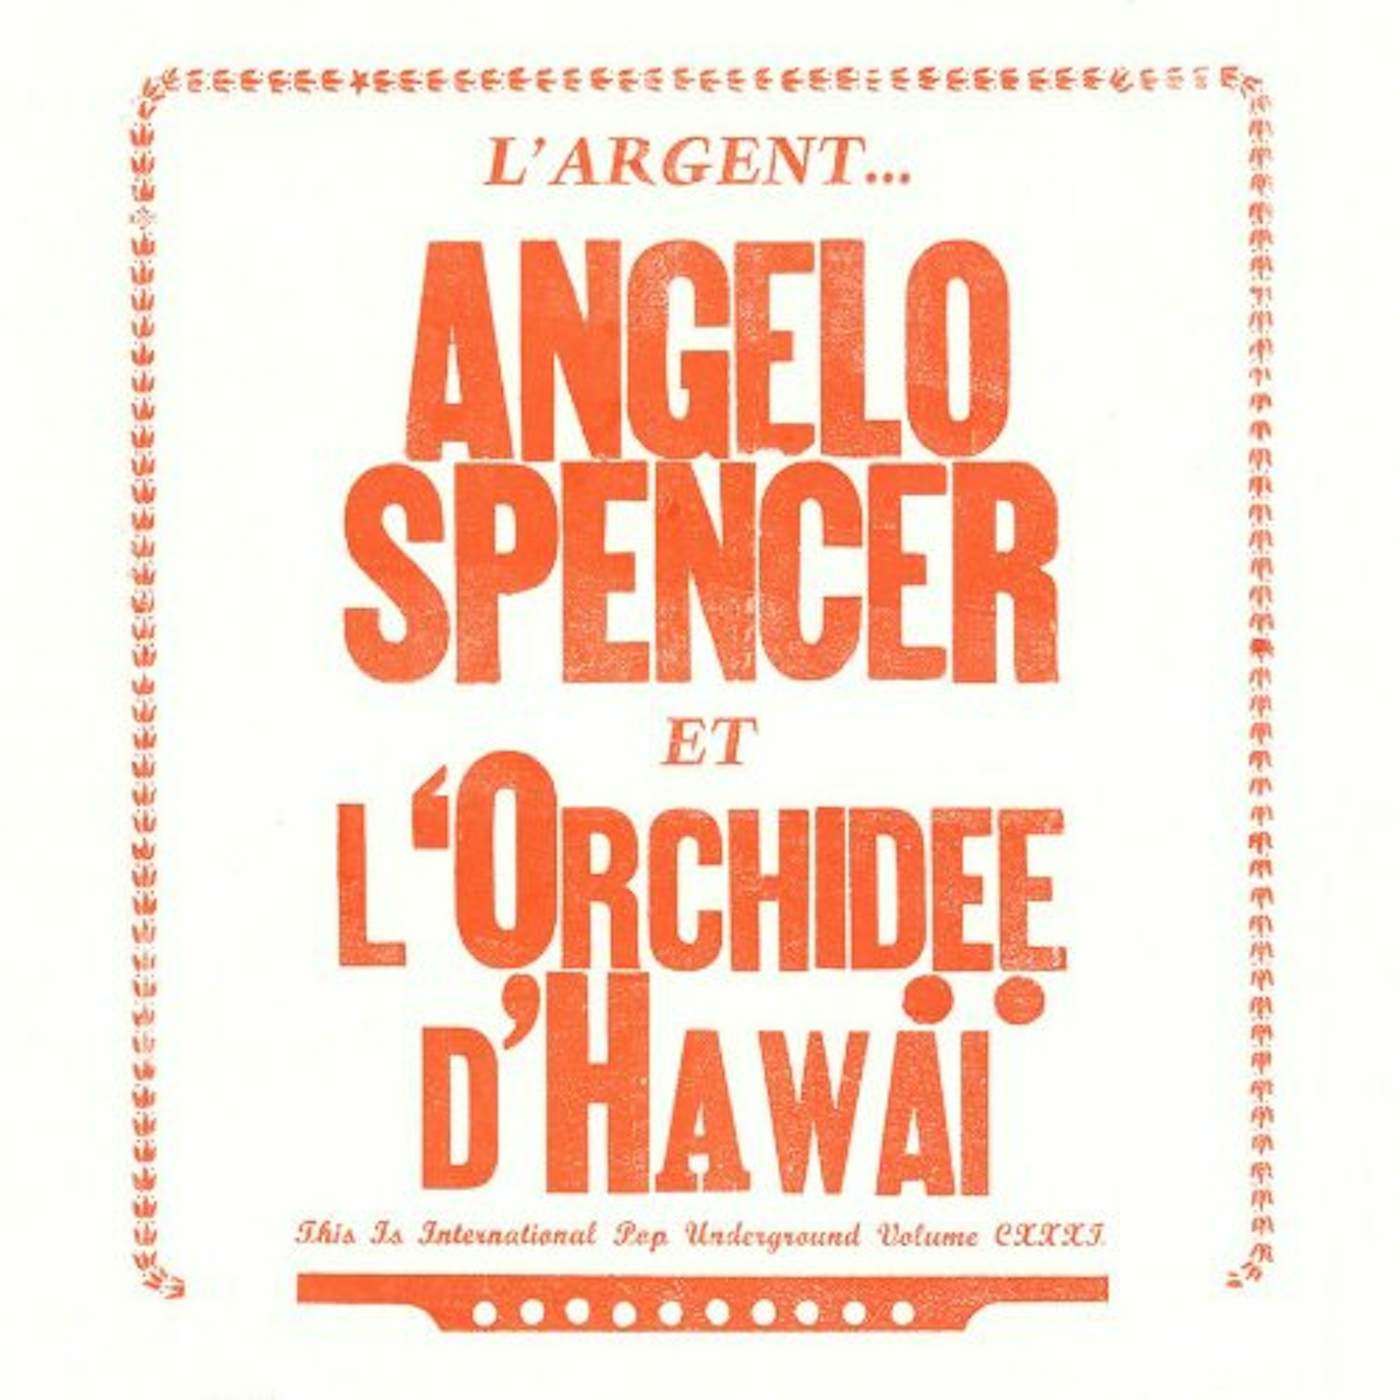 Angelo Spencer LARGENT Vinyl Record